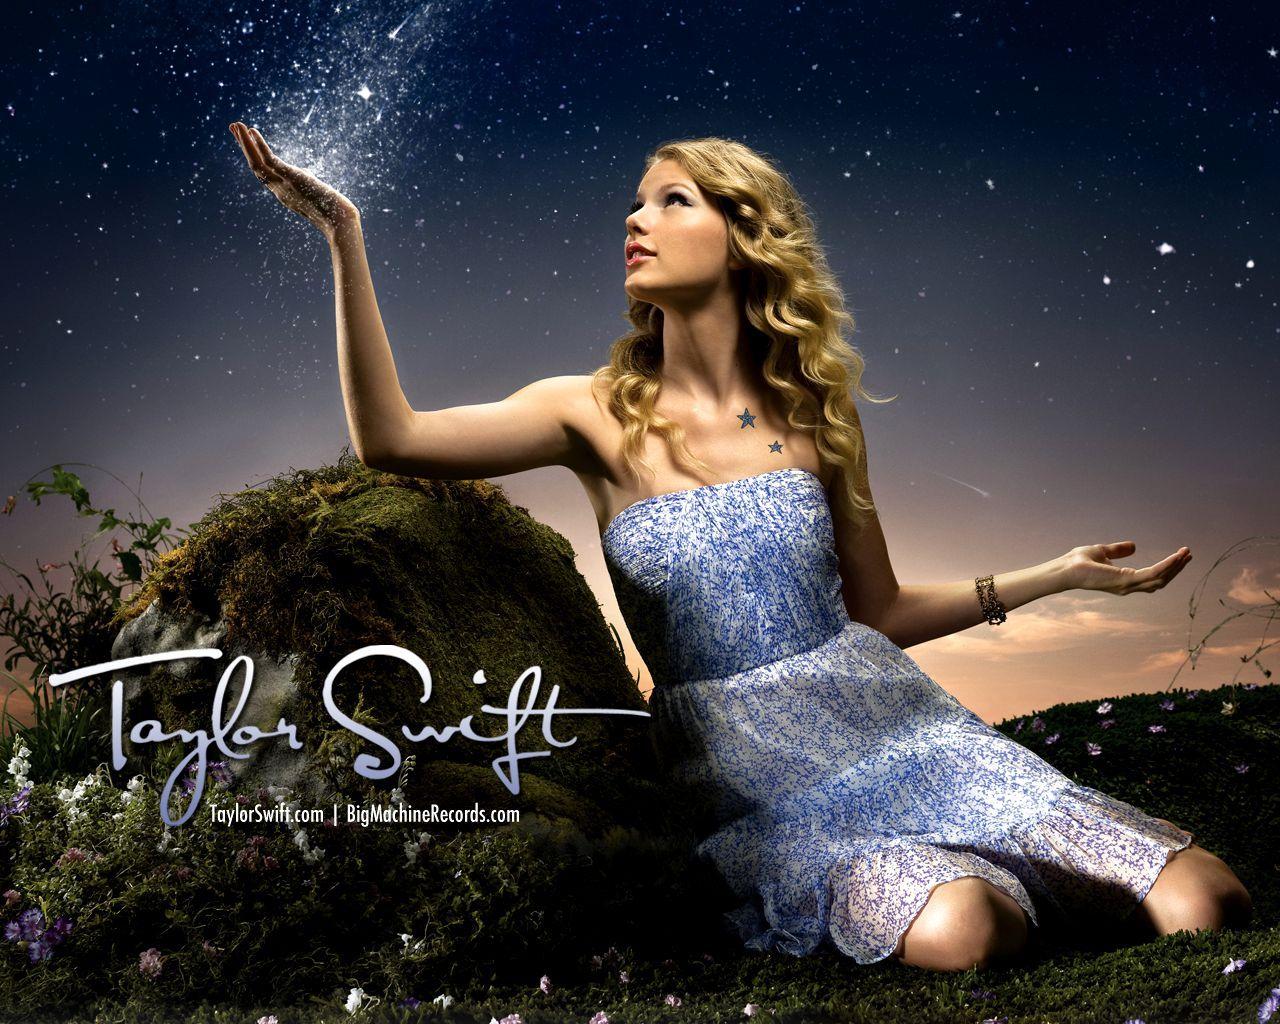 Taylor Swift American Pop Singer Wallpaper. wallgem. Free